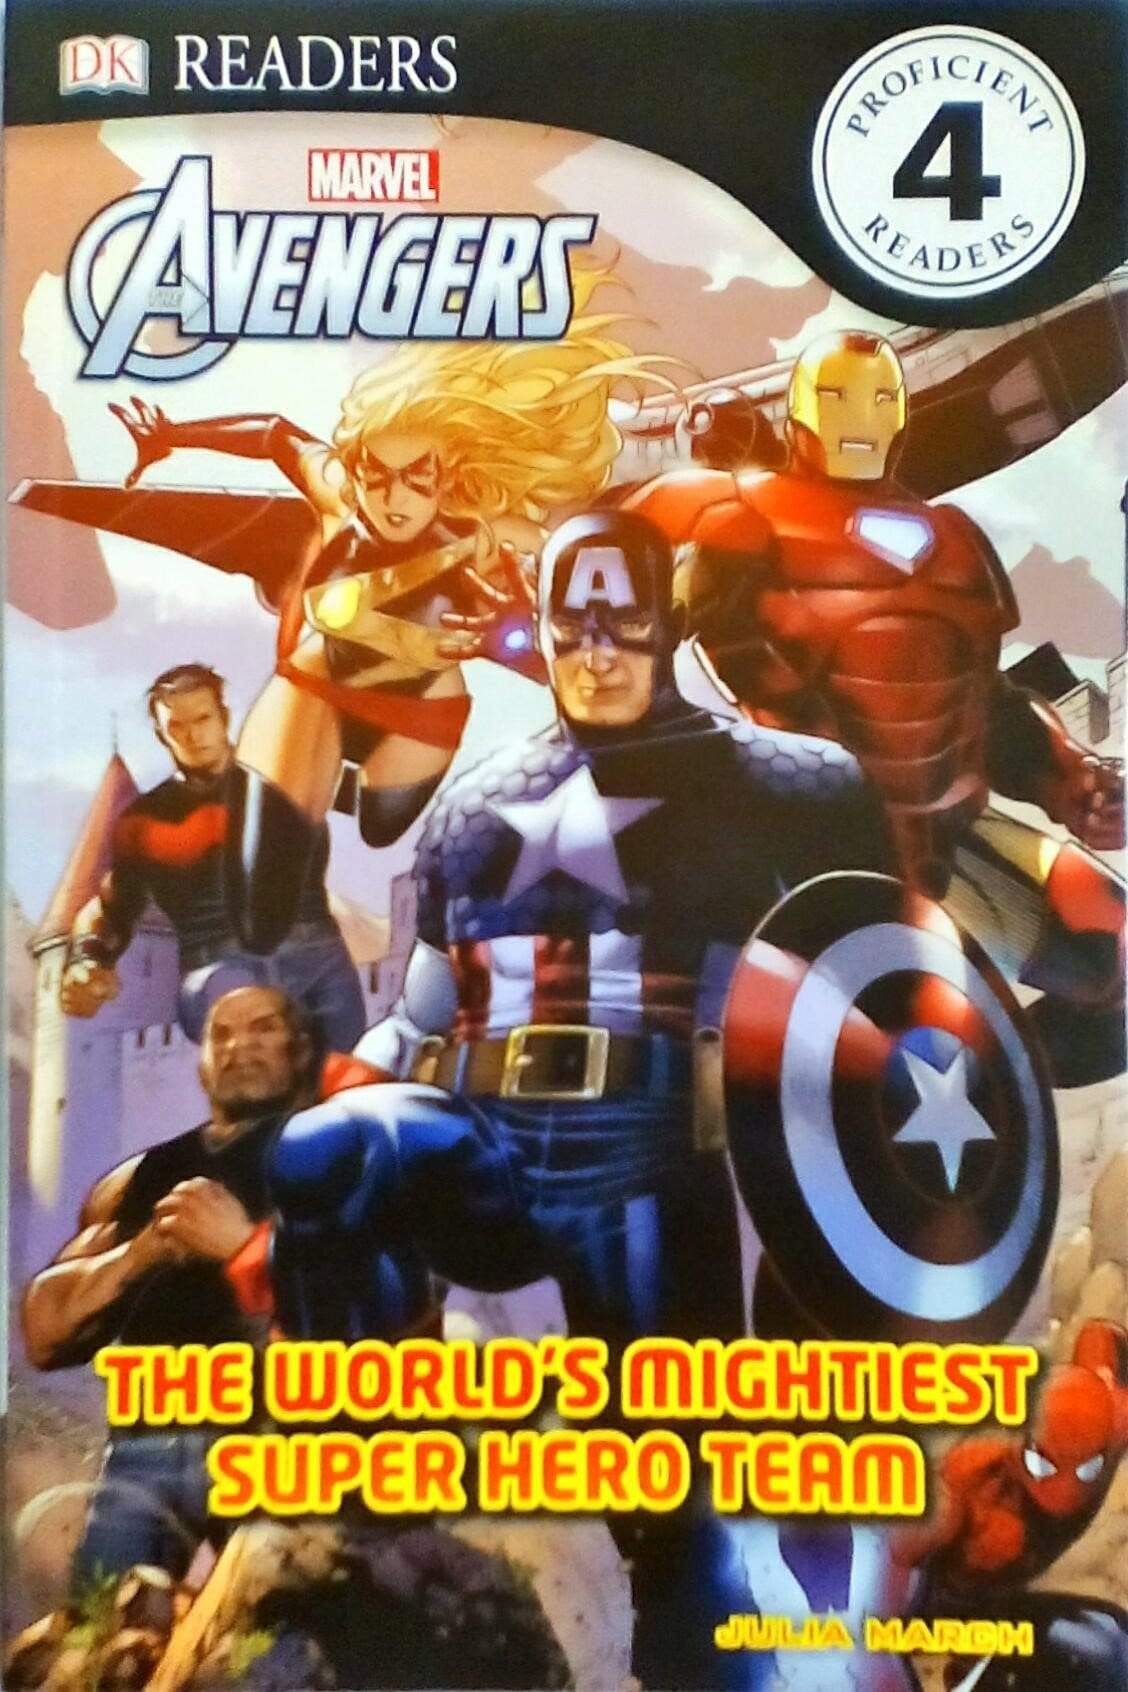 Marvel Avengers: The World's Mightiest Super Hero Team